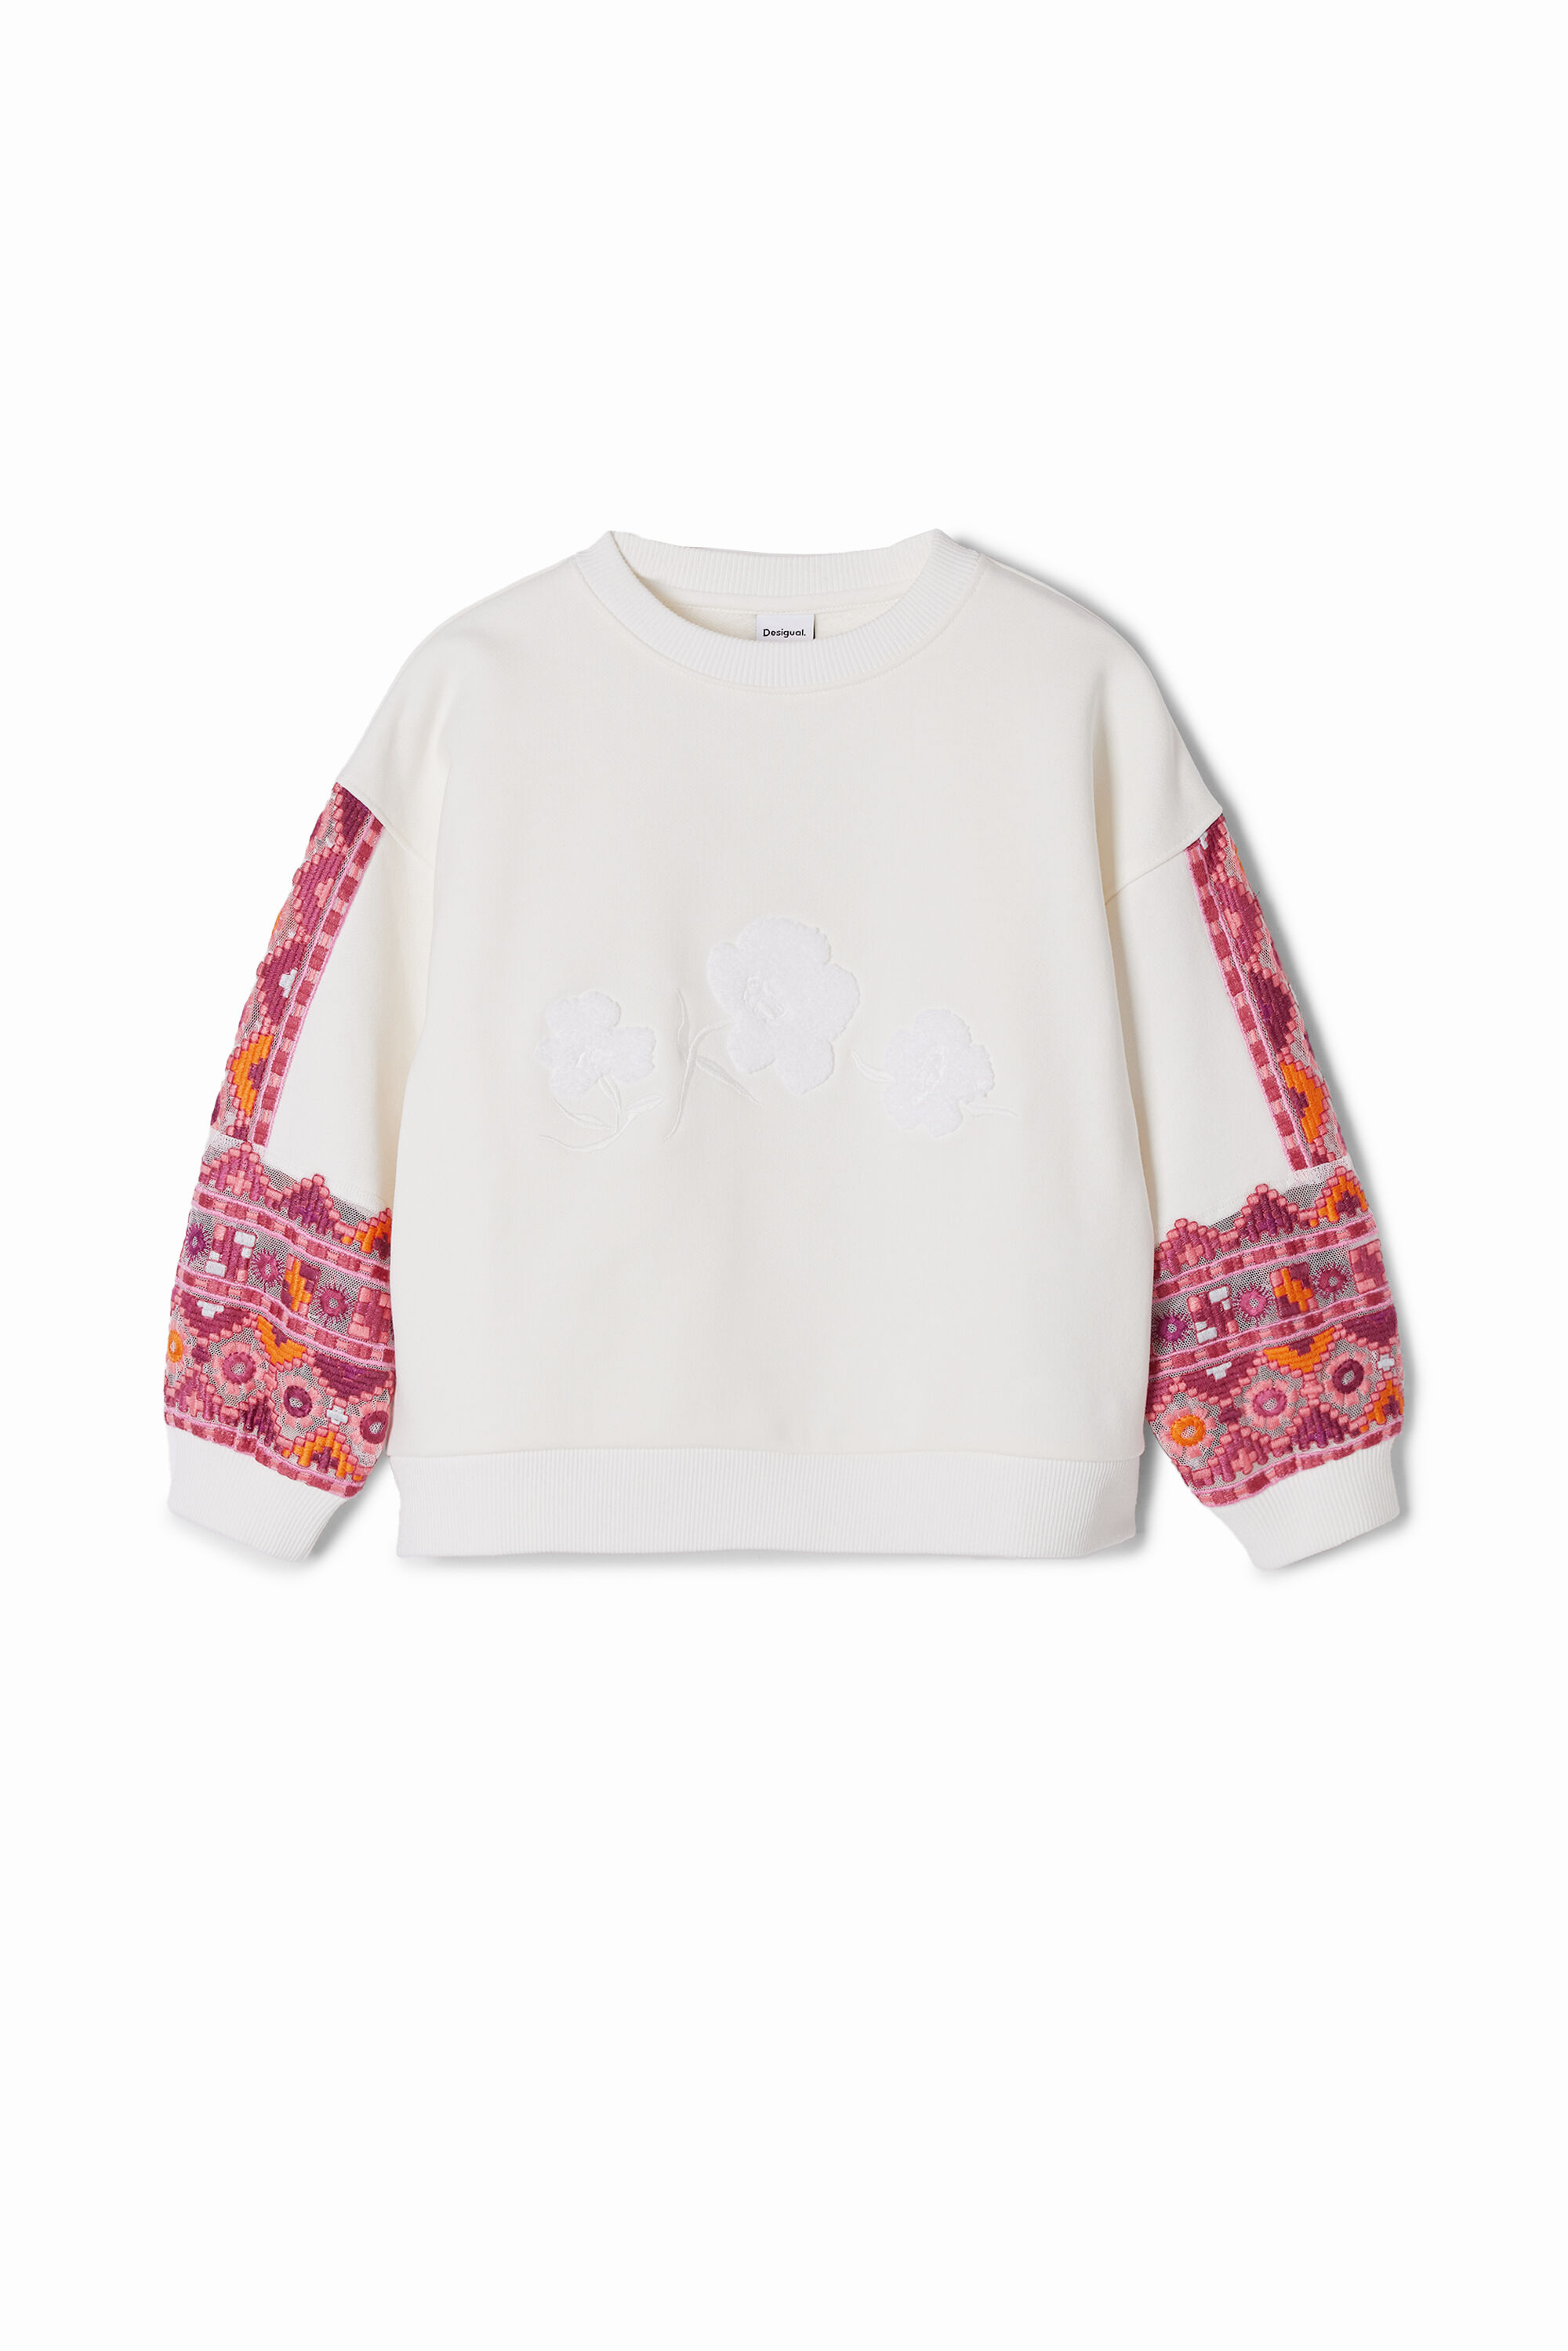 Embroidered puff sweatshirt - WHITE - S